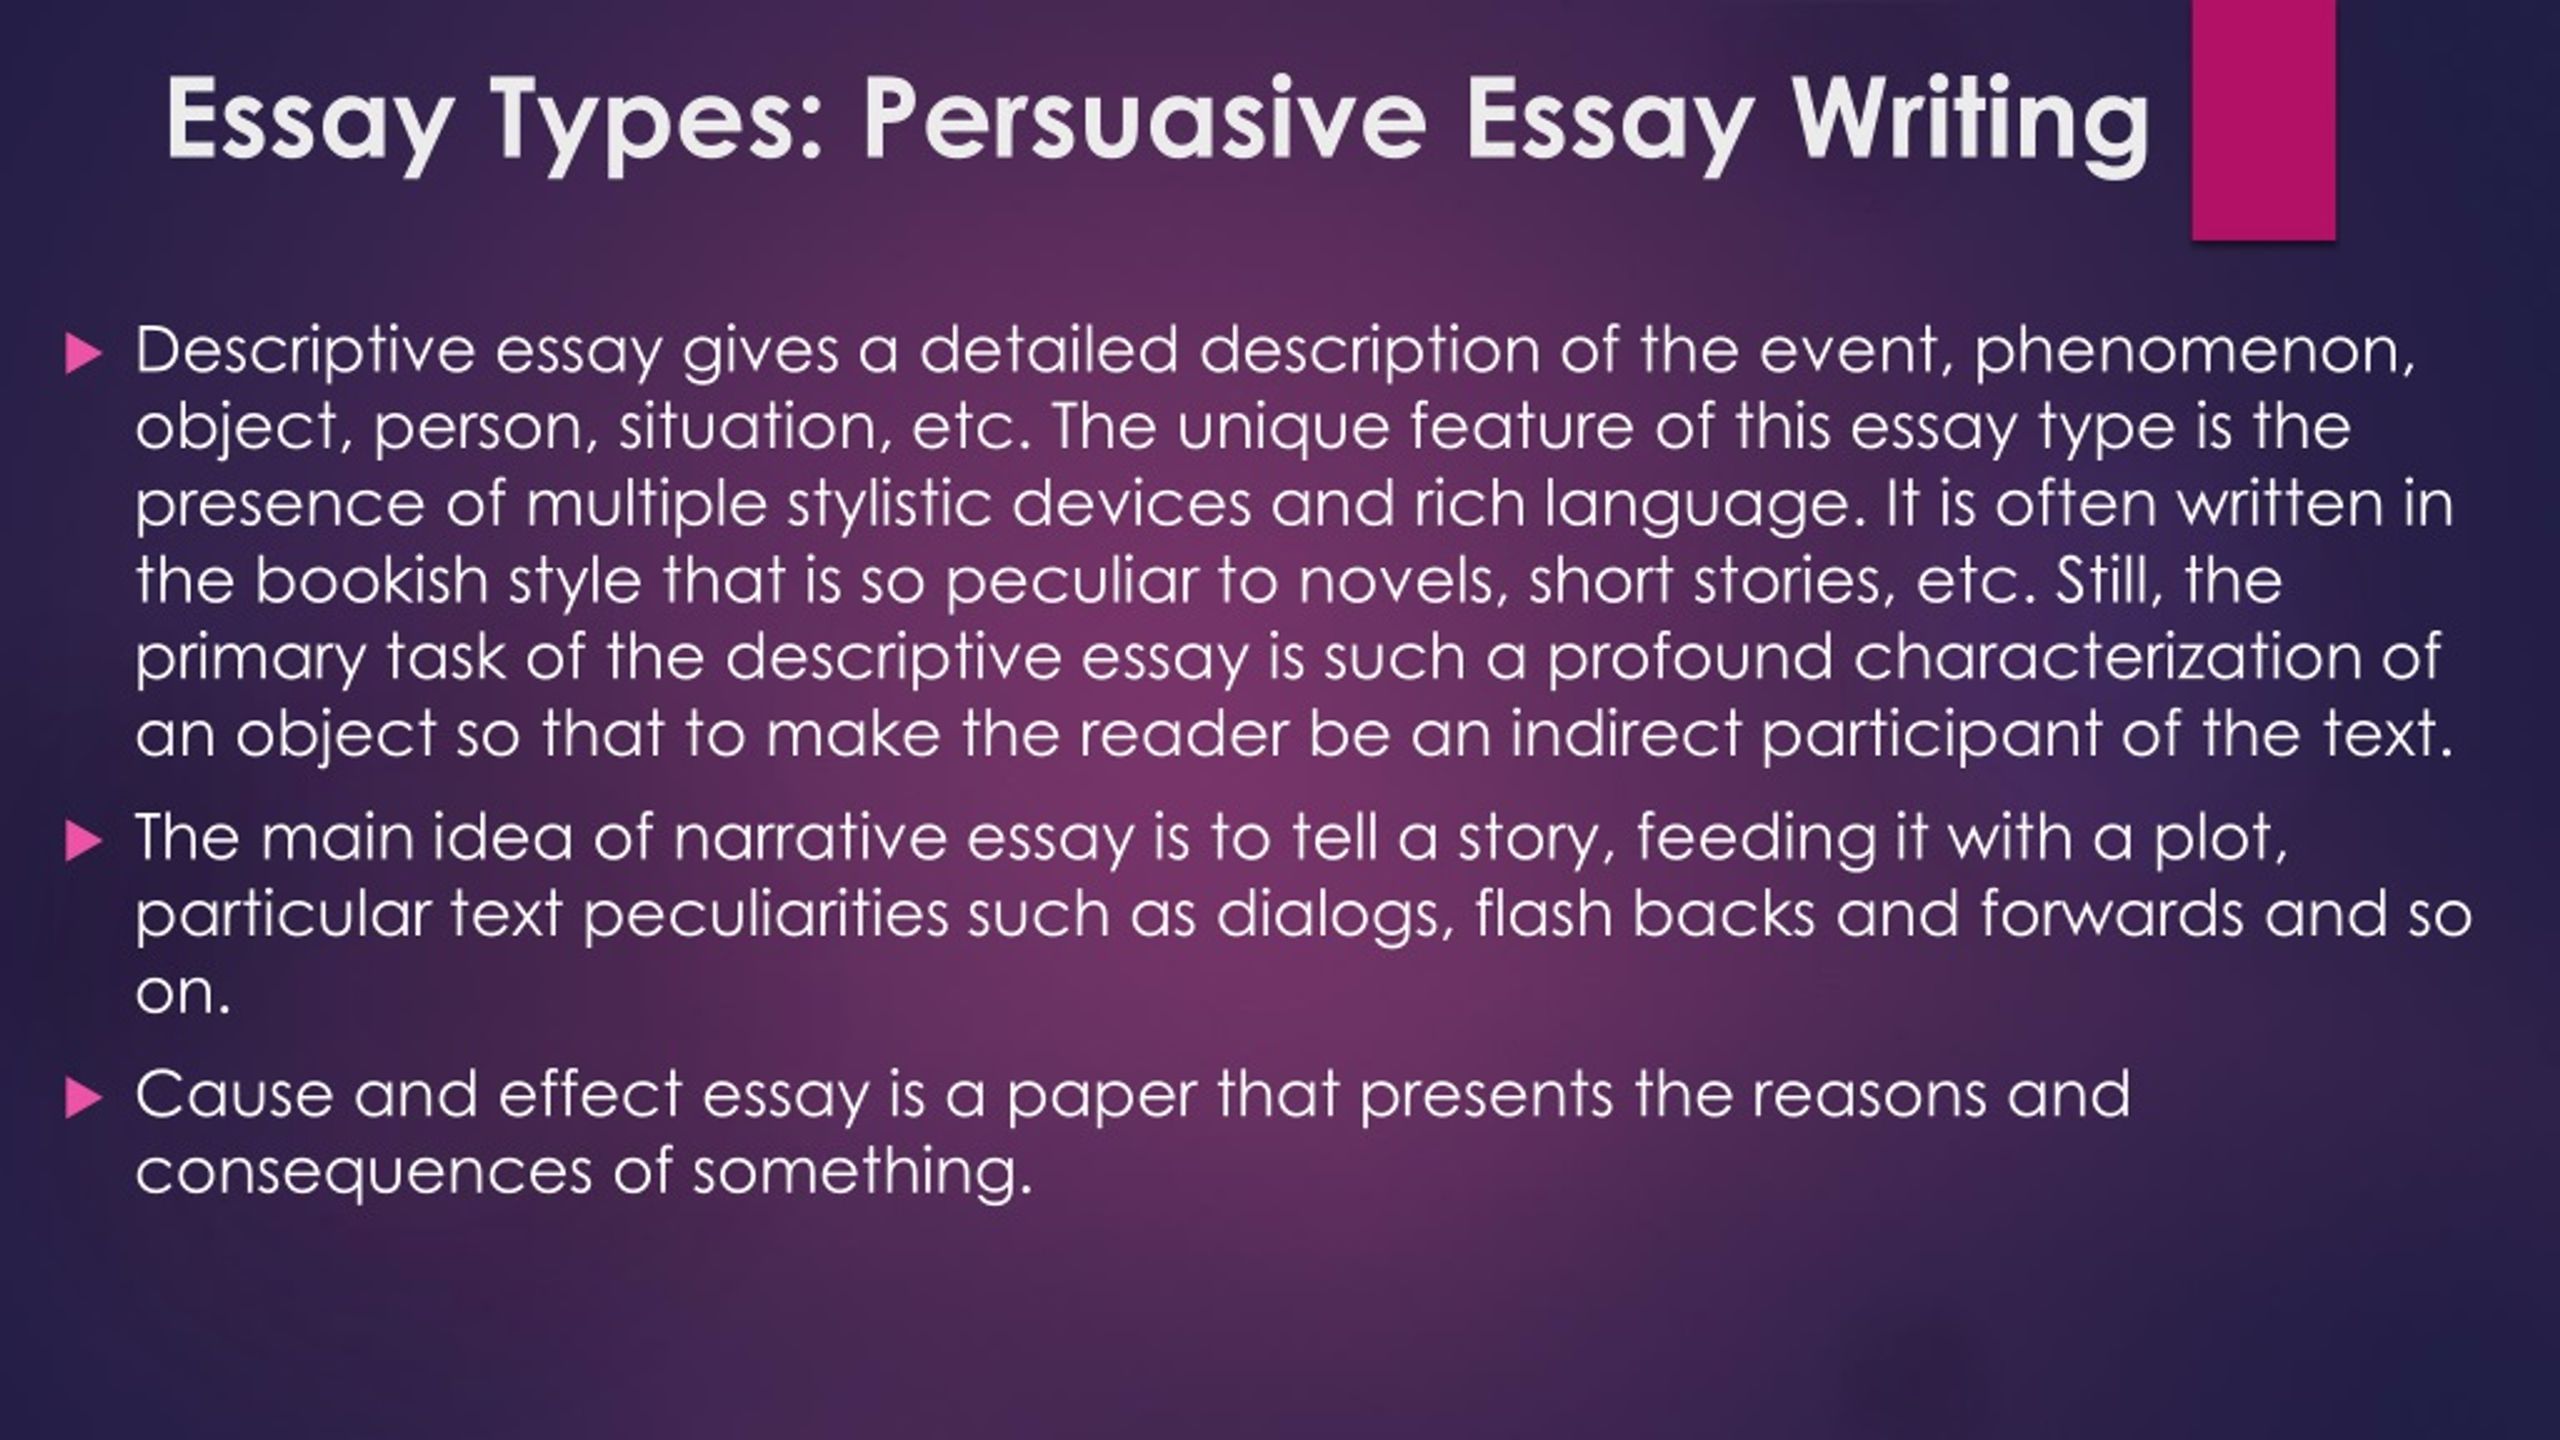 Types of persuasive essay